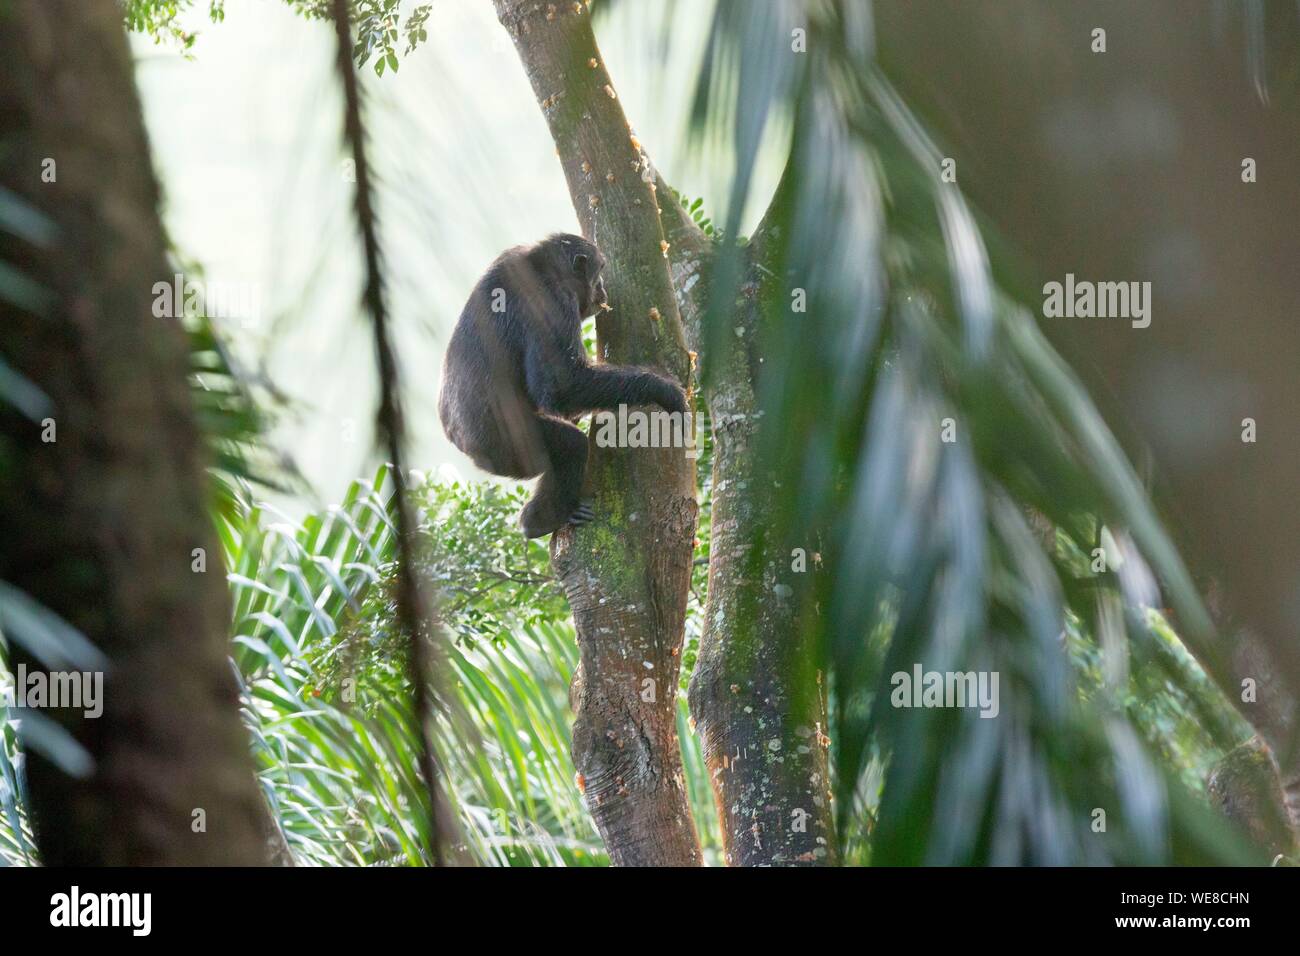 Burundi, Vyanda Nature Reserve in the bututsi, Chimpanzee (Pan troglodytes) Stock Photo